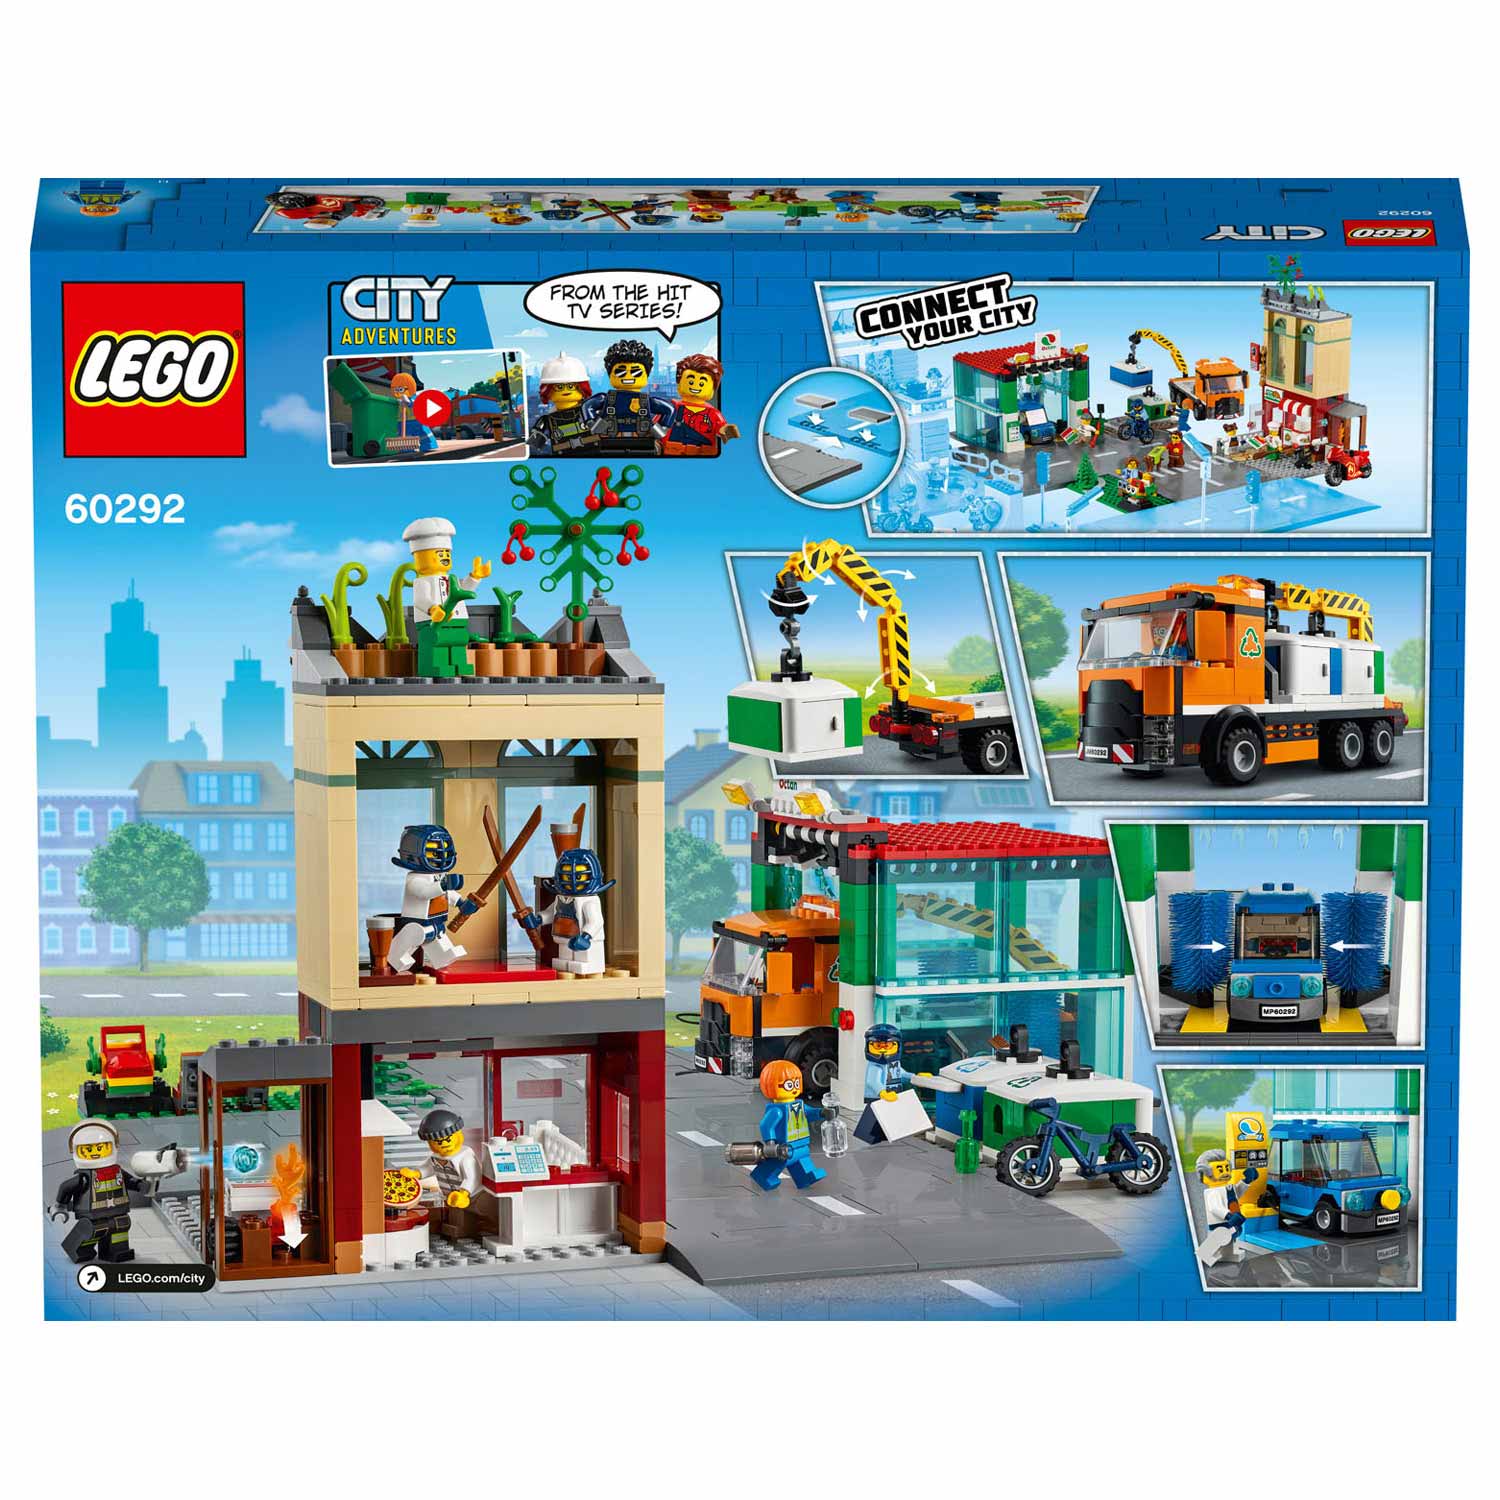 LEGO City Town 60292 Stadscentrum